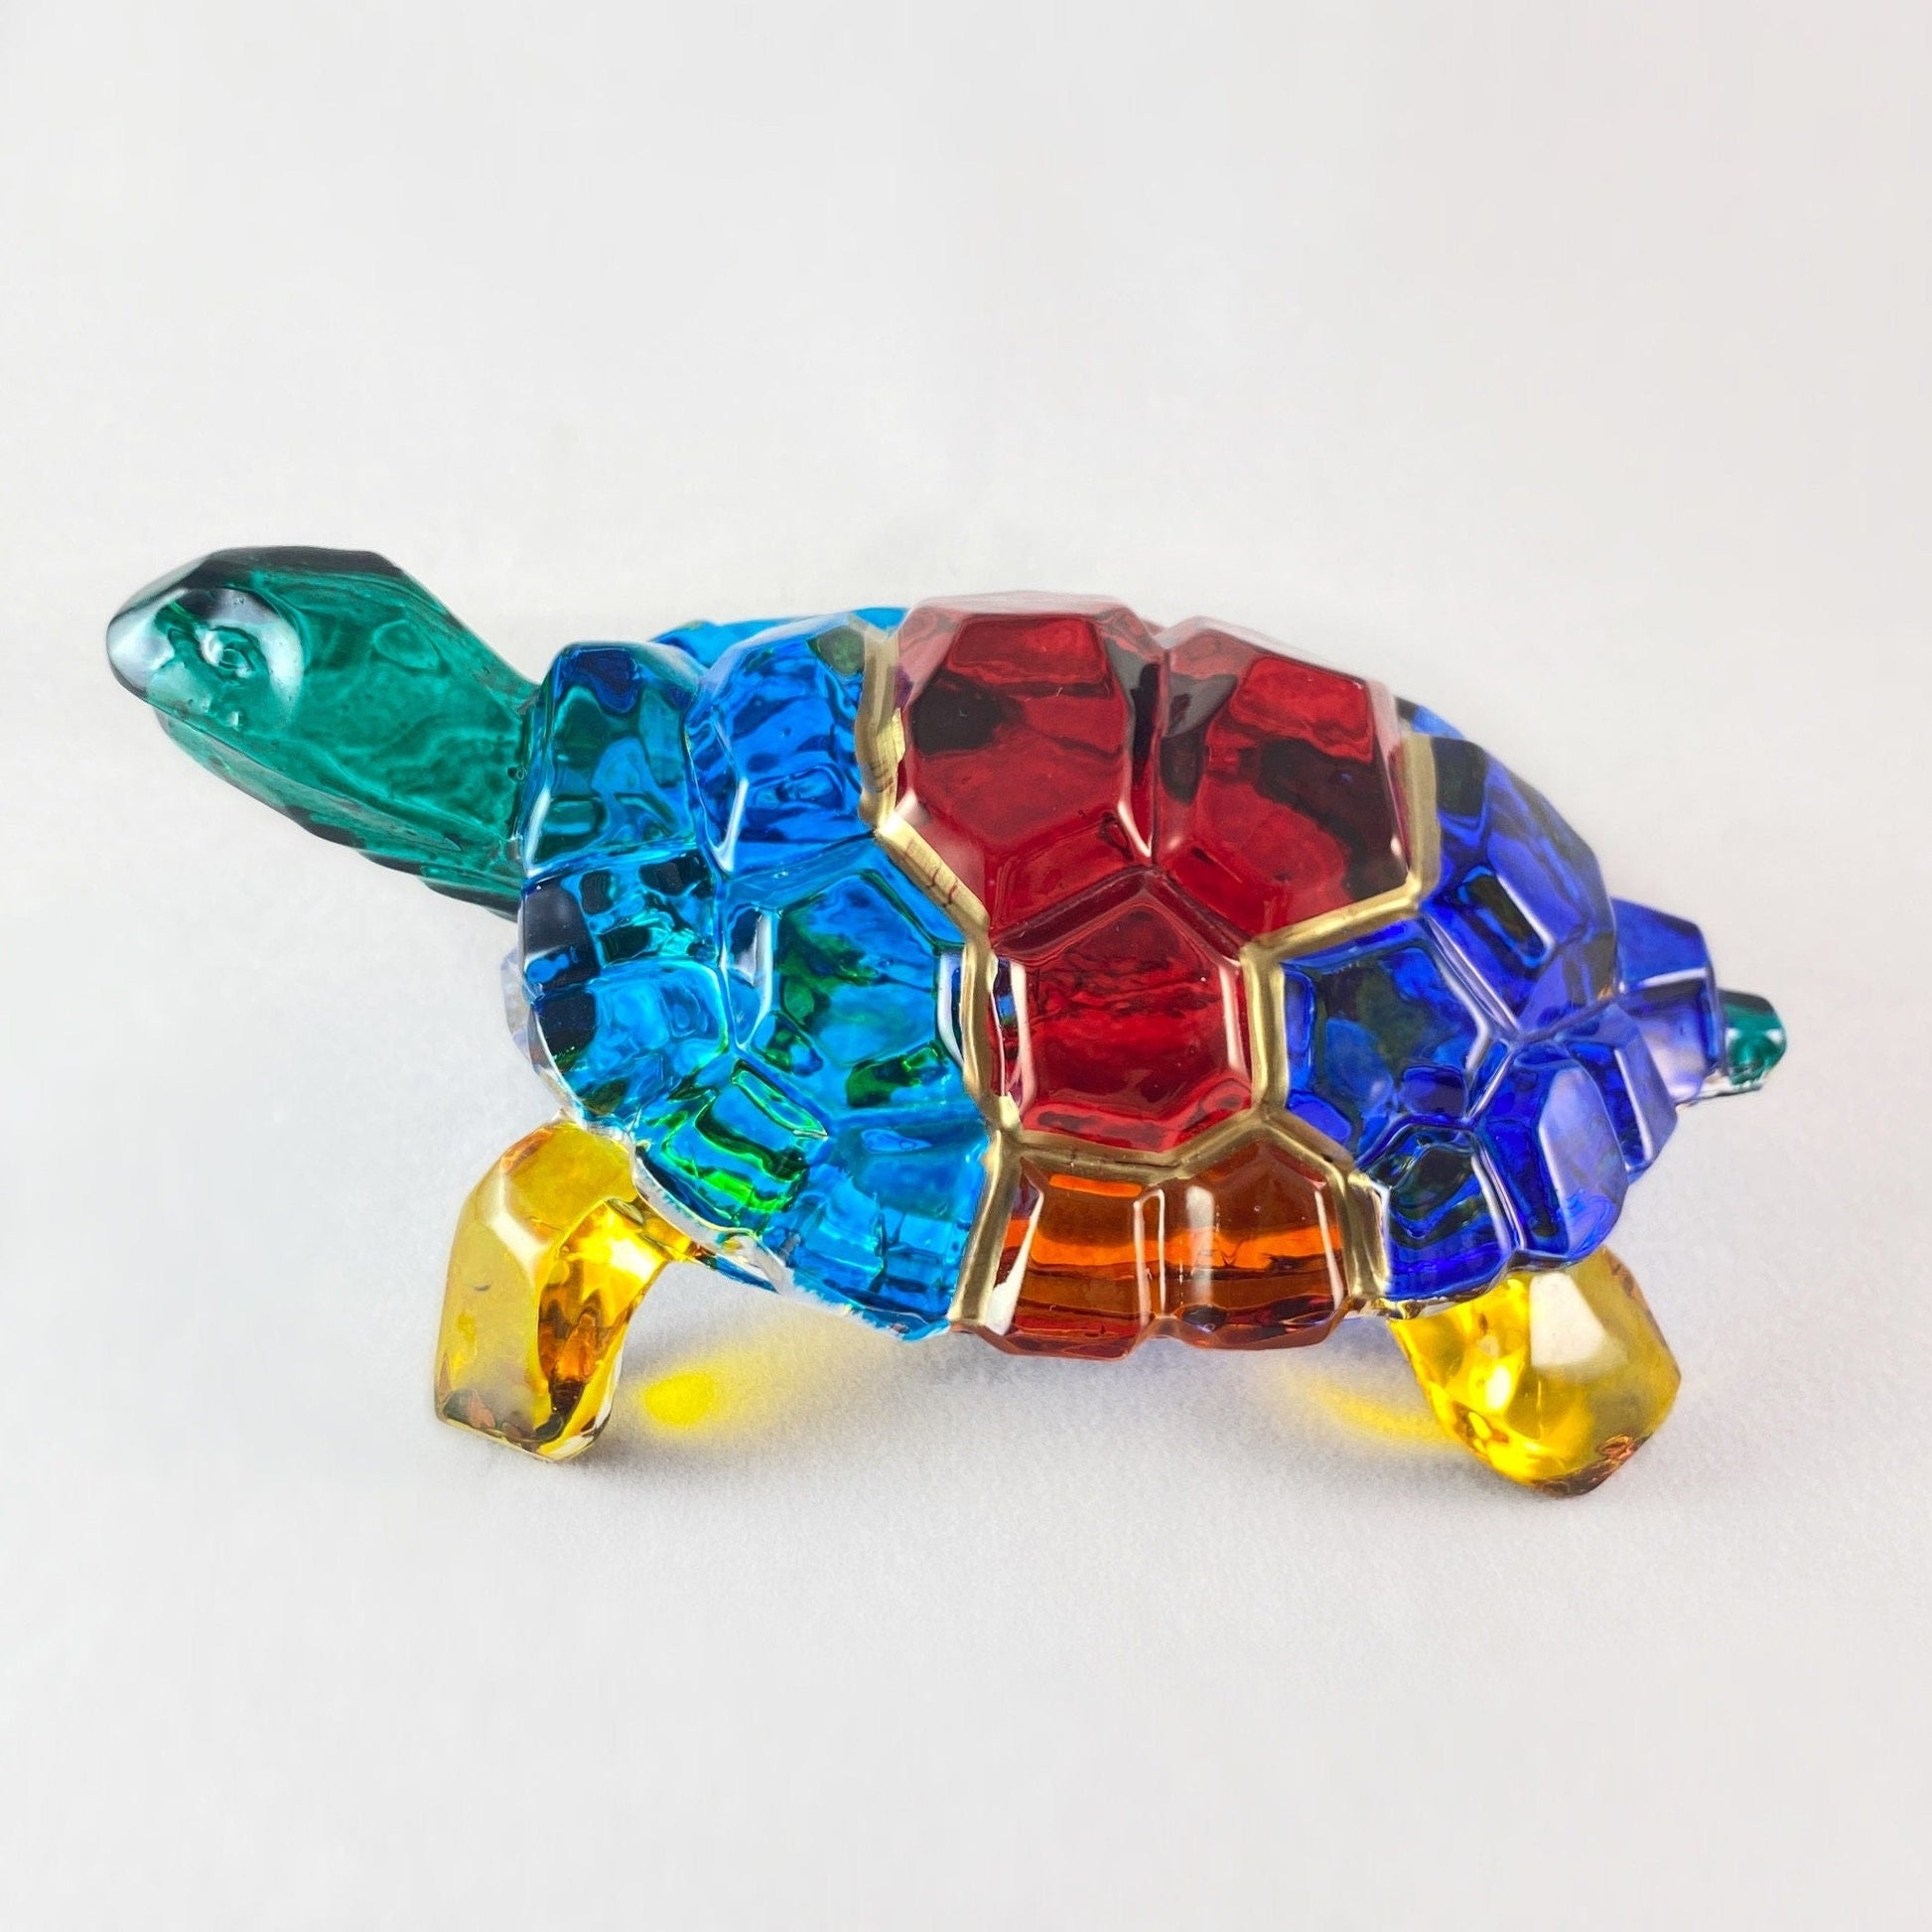 Venetian Glass Turtle - Handmade in Italy, Colorful Murano Glass